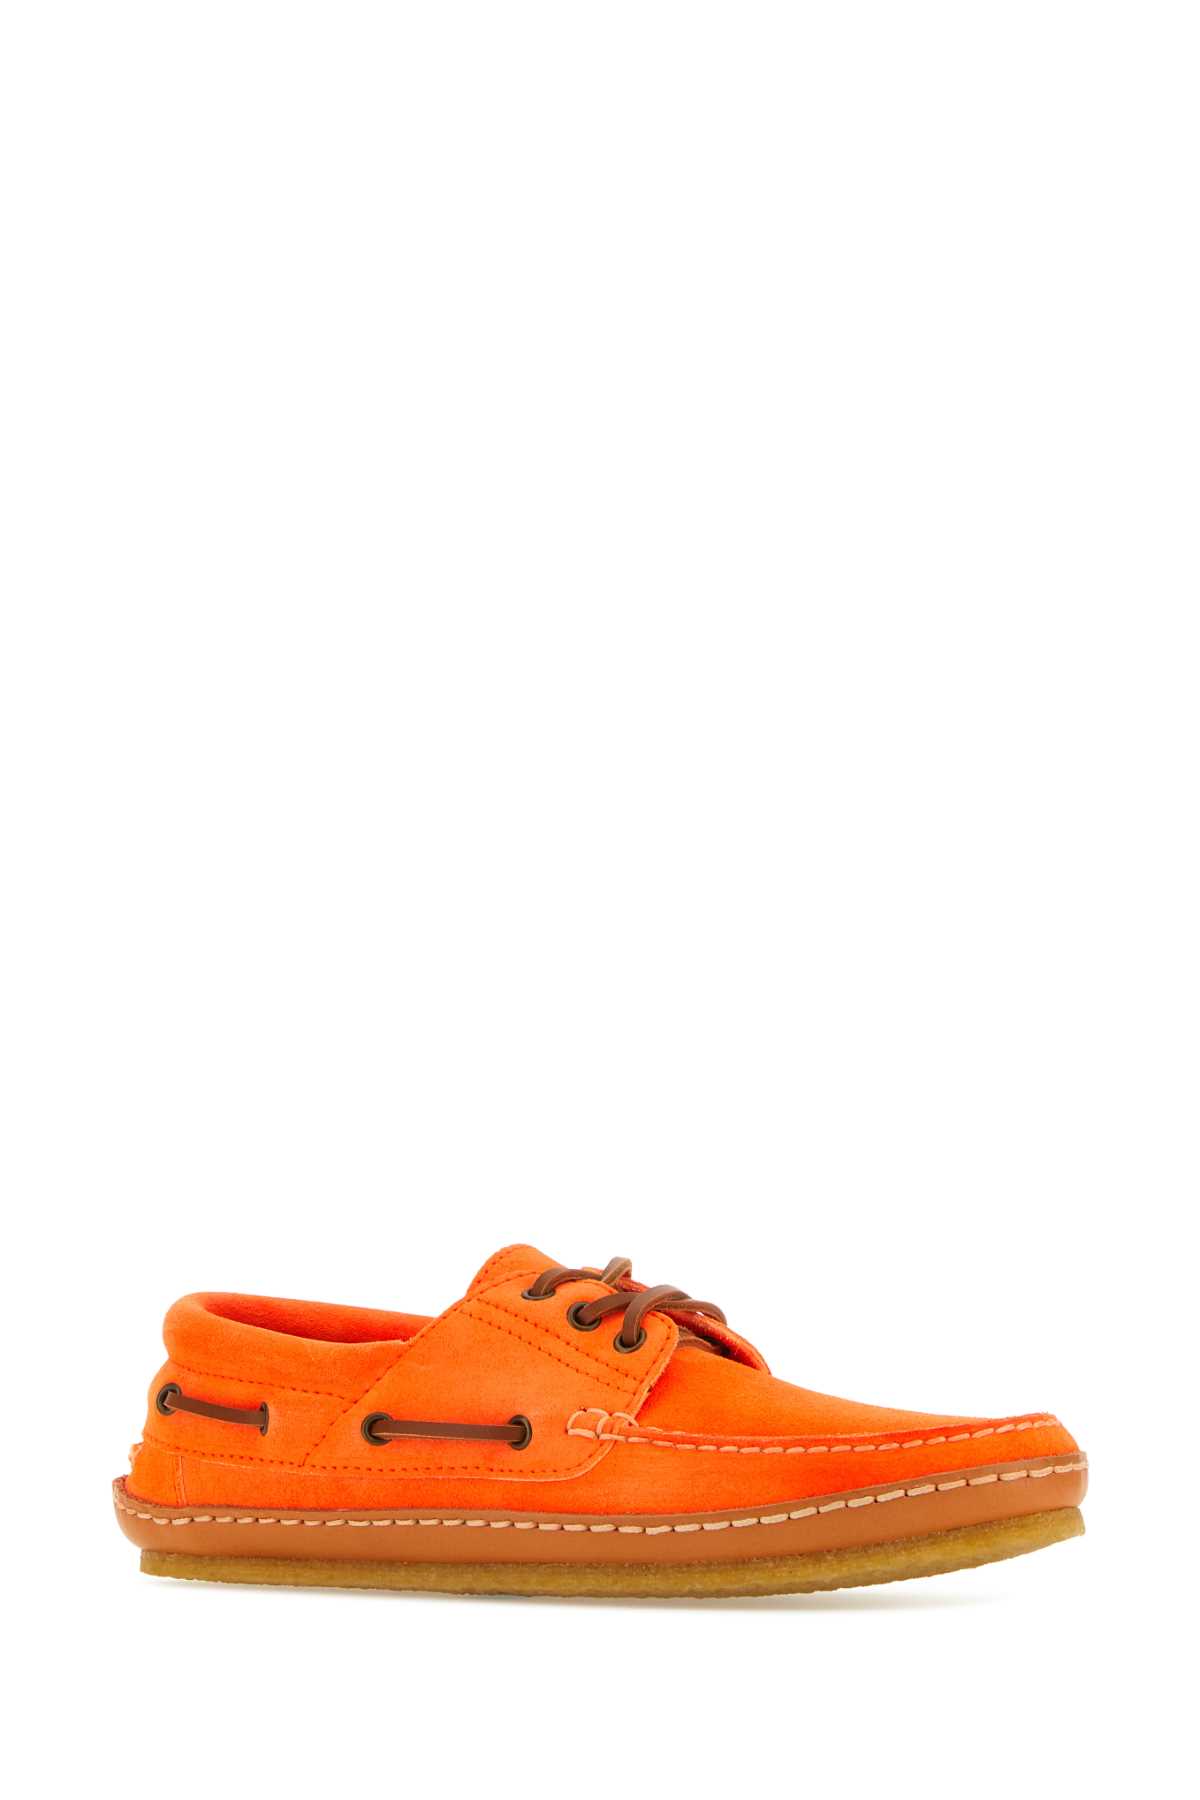 Shop Saint Laurent Fluo Orange Suede Ashe Loafers